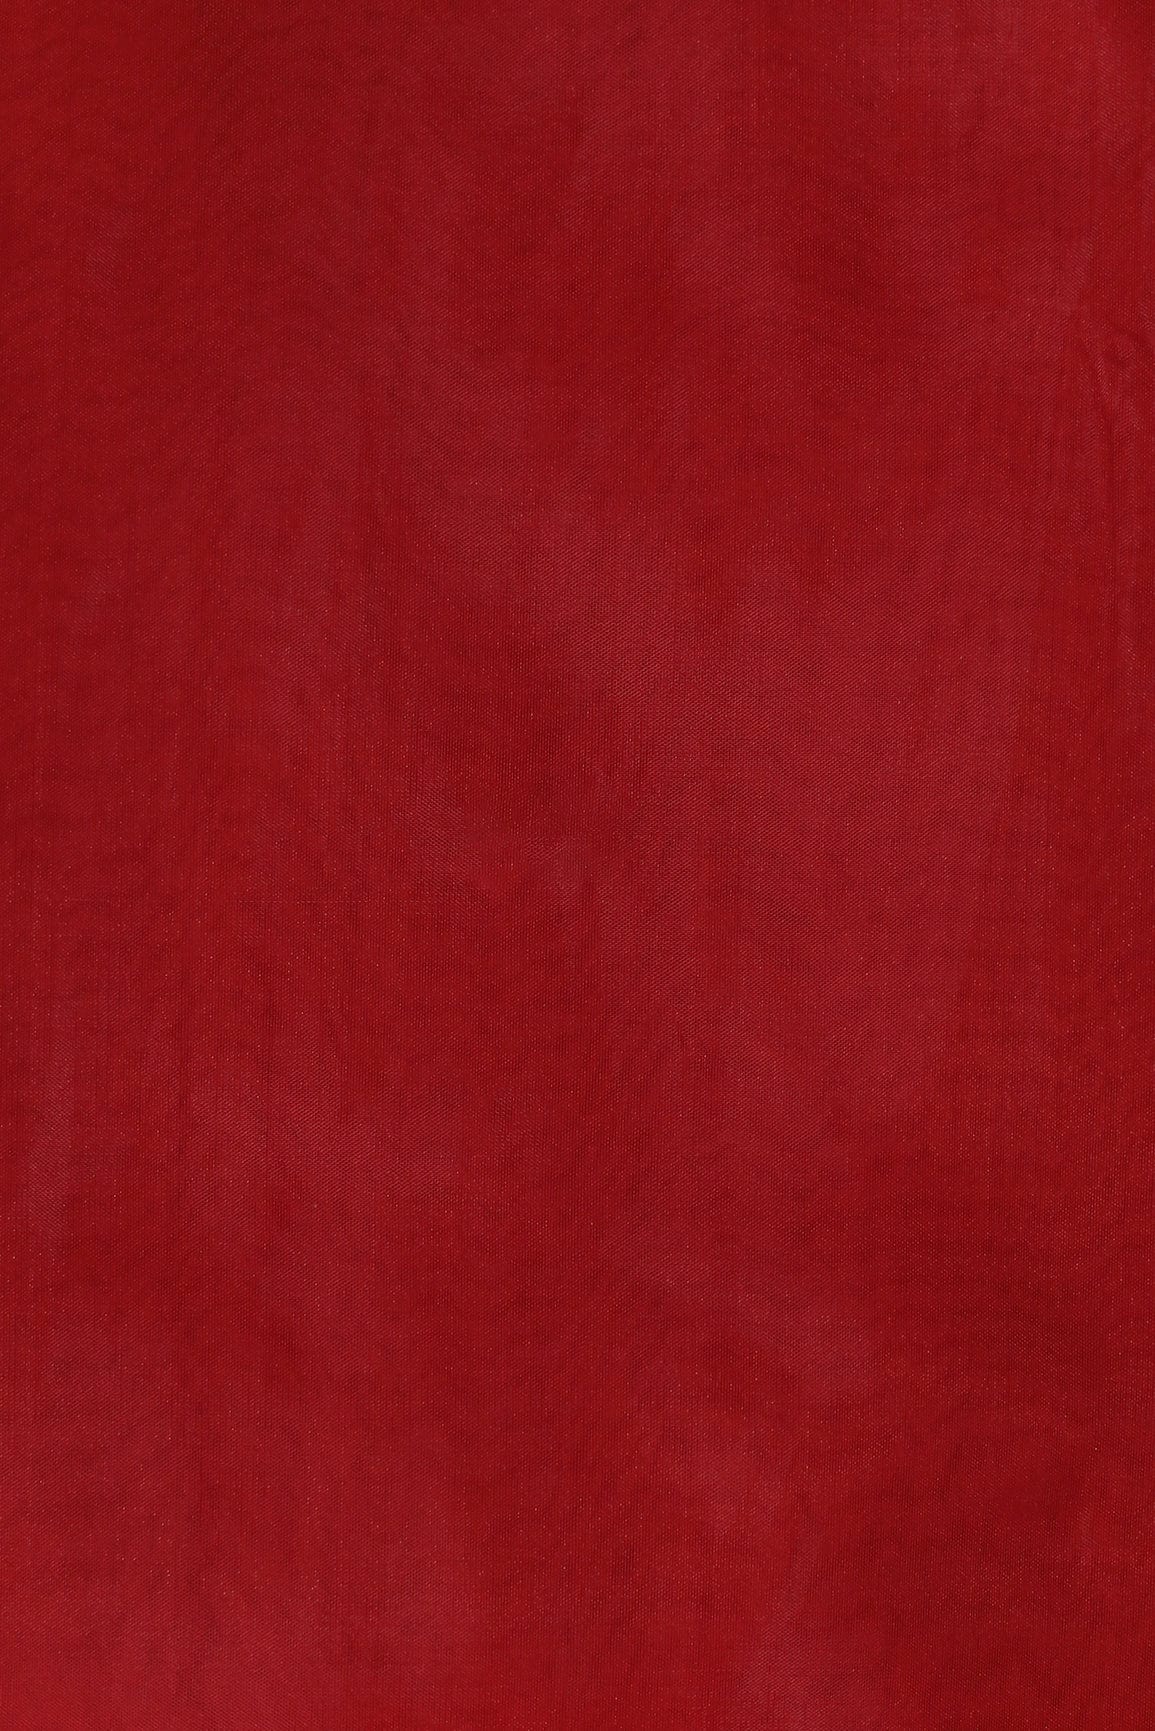 doeraa Plain Dyed Fabrics Red Dyed Tissue Fabric